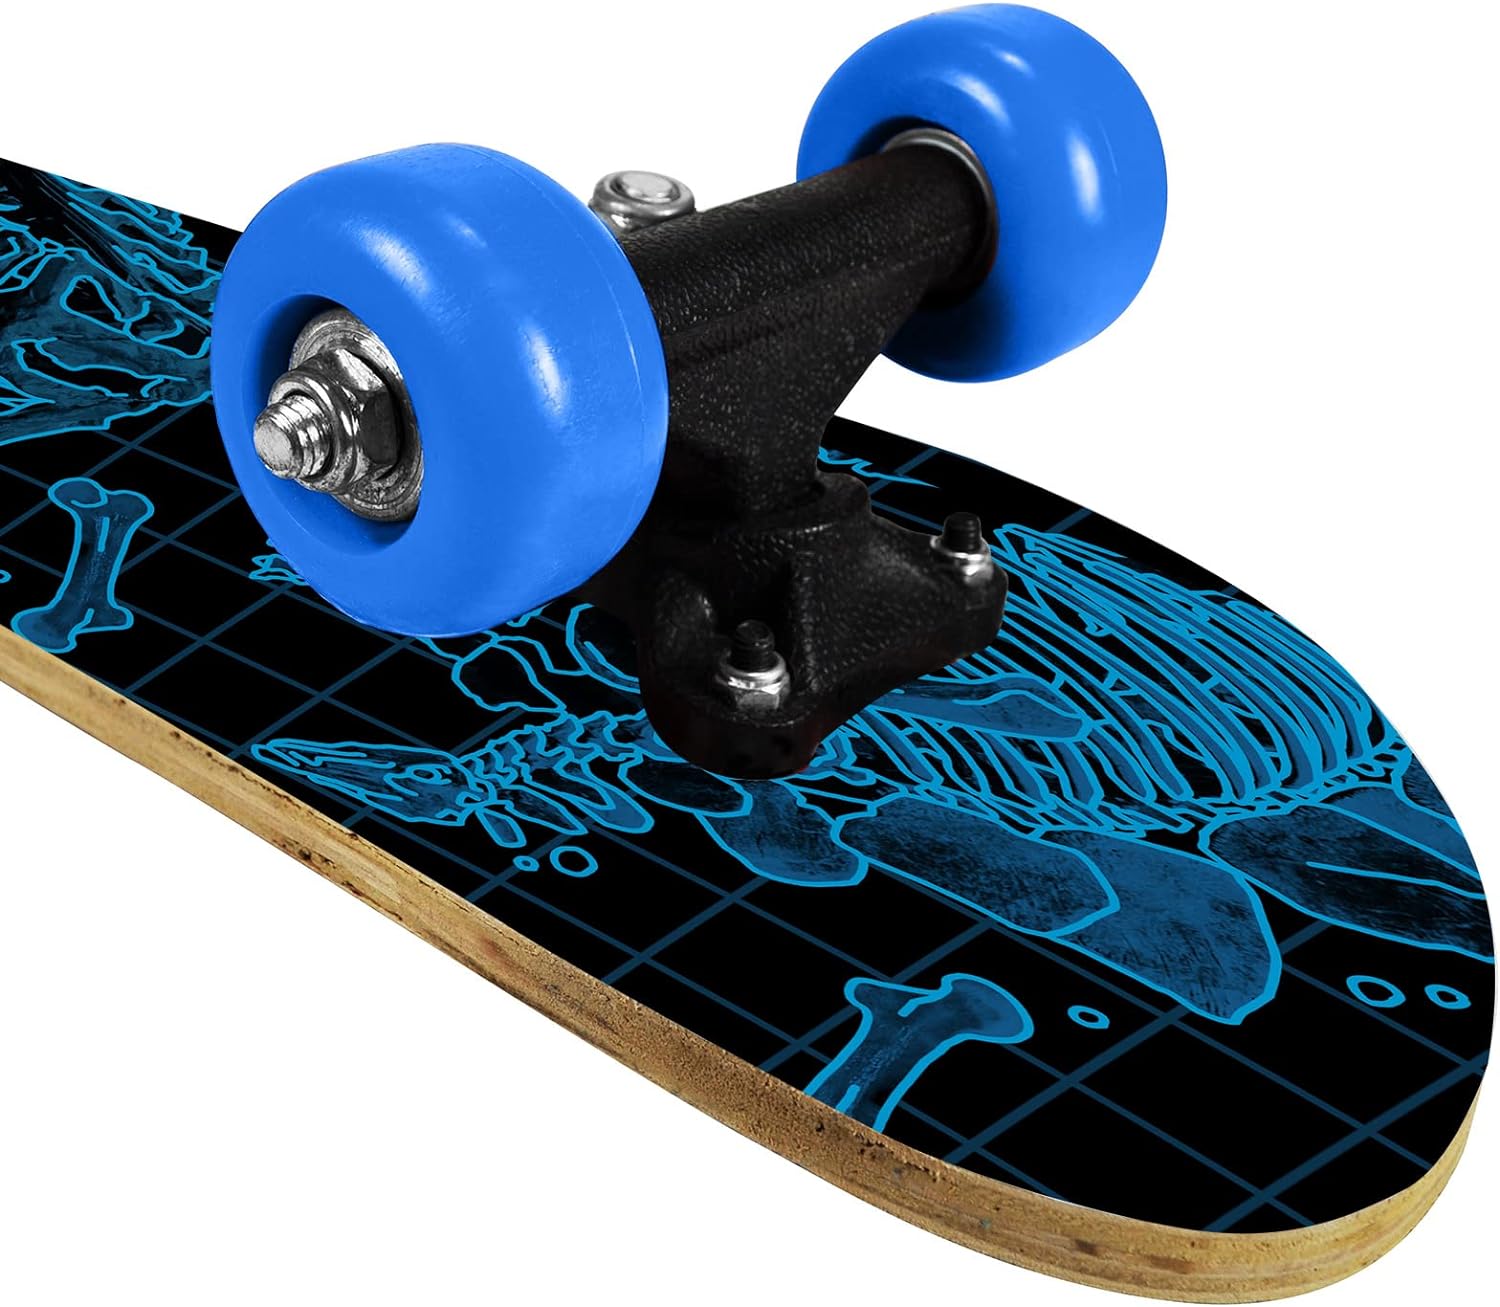 Kids Beginner Skateboard from Rude Boyz - Learn Skateboarding in Style - Mini Wooden Cruiser Board with Cool Graphics for Boys  Girls 5-9 Years - 24” Deck, 54mm Wheels, Lightweight - Safe  Durable